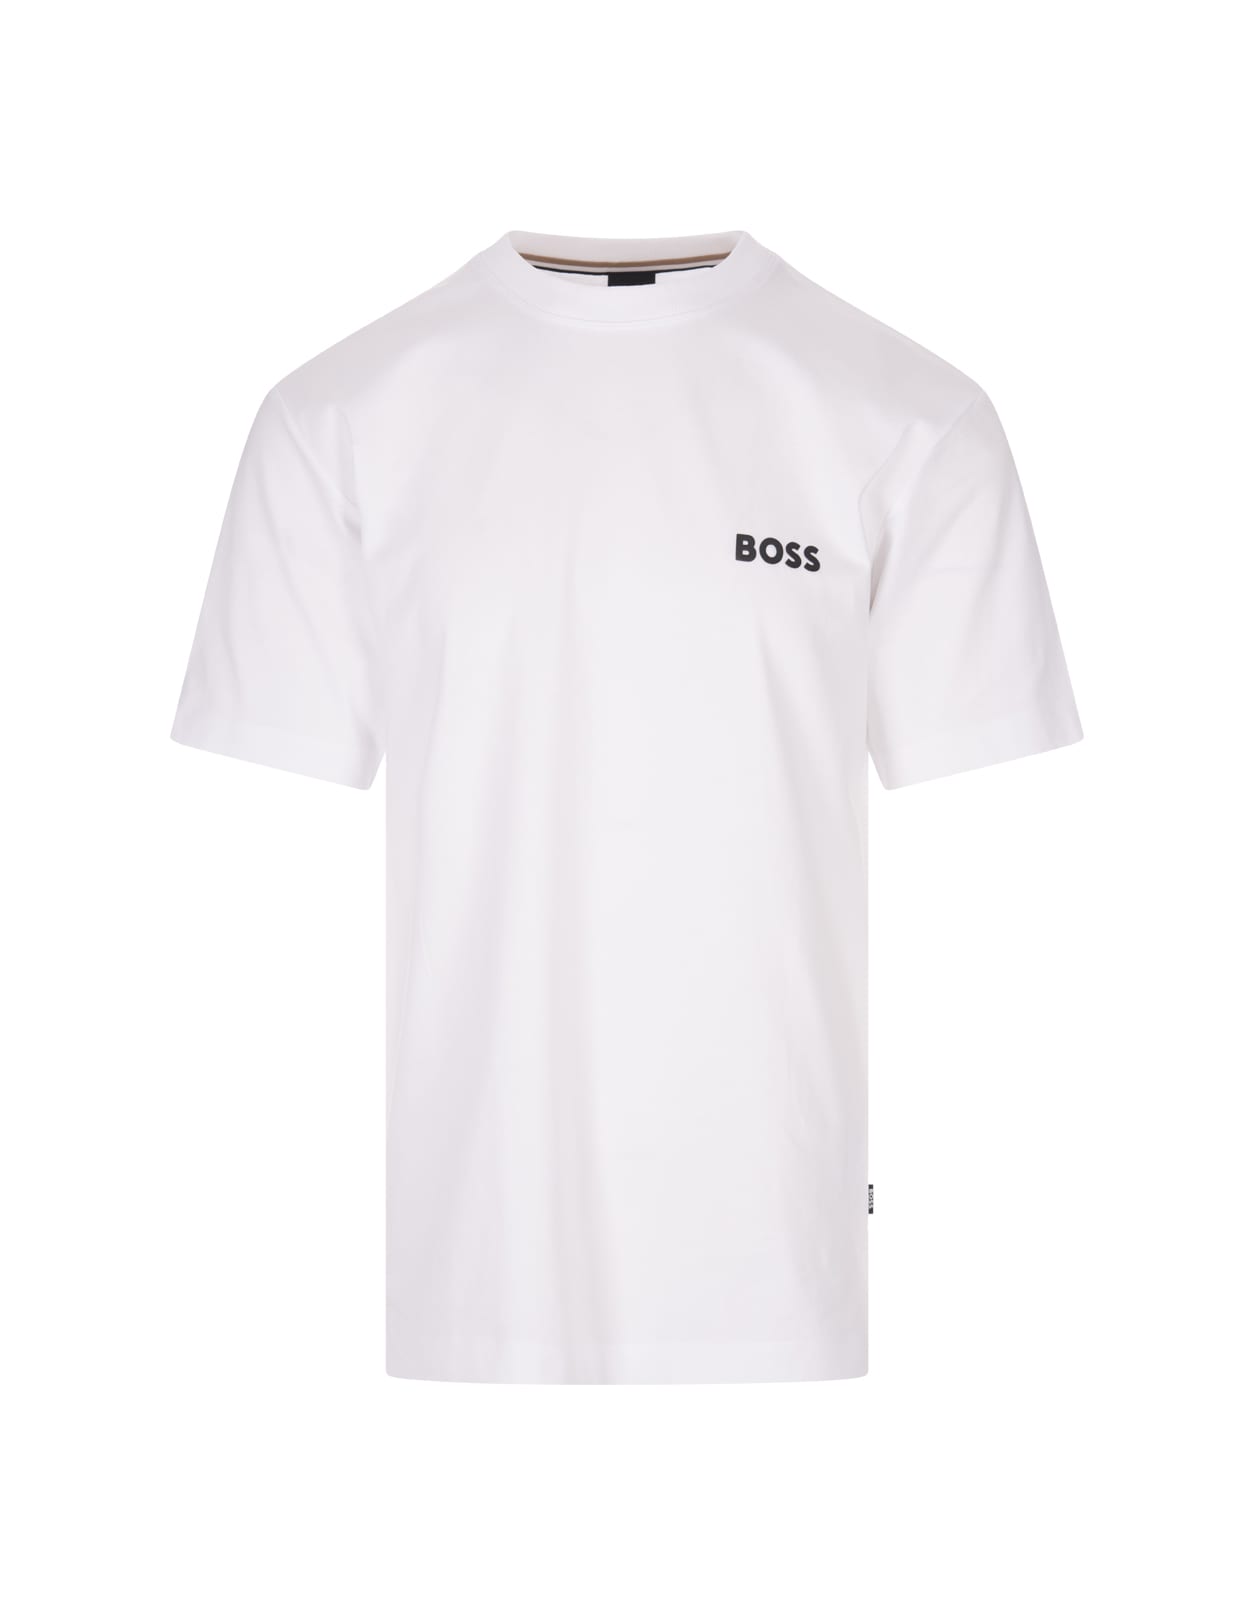 Hugo Boss White T-shirt With Print